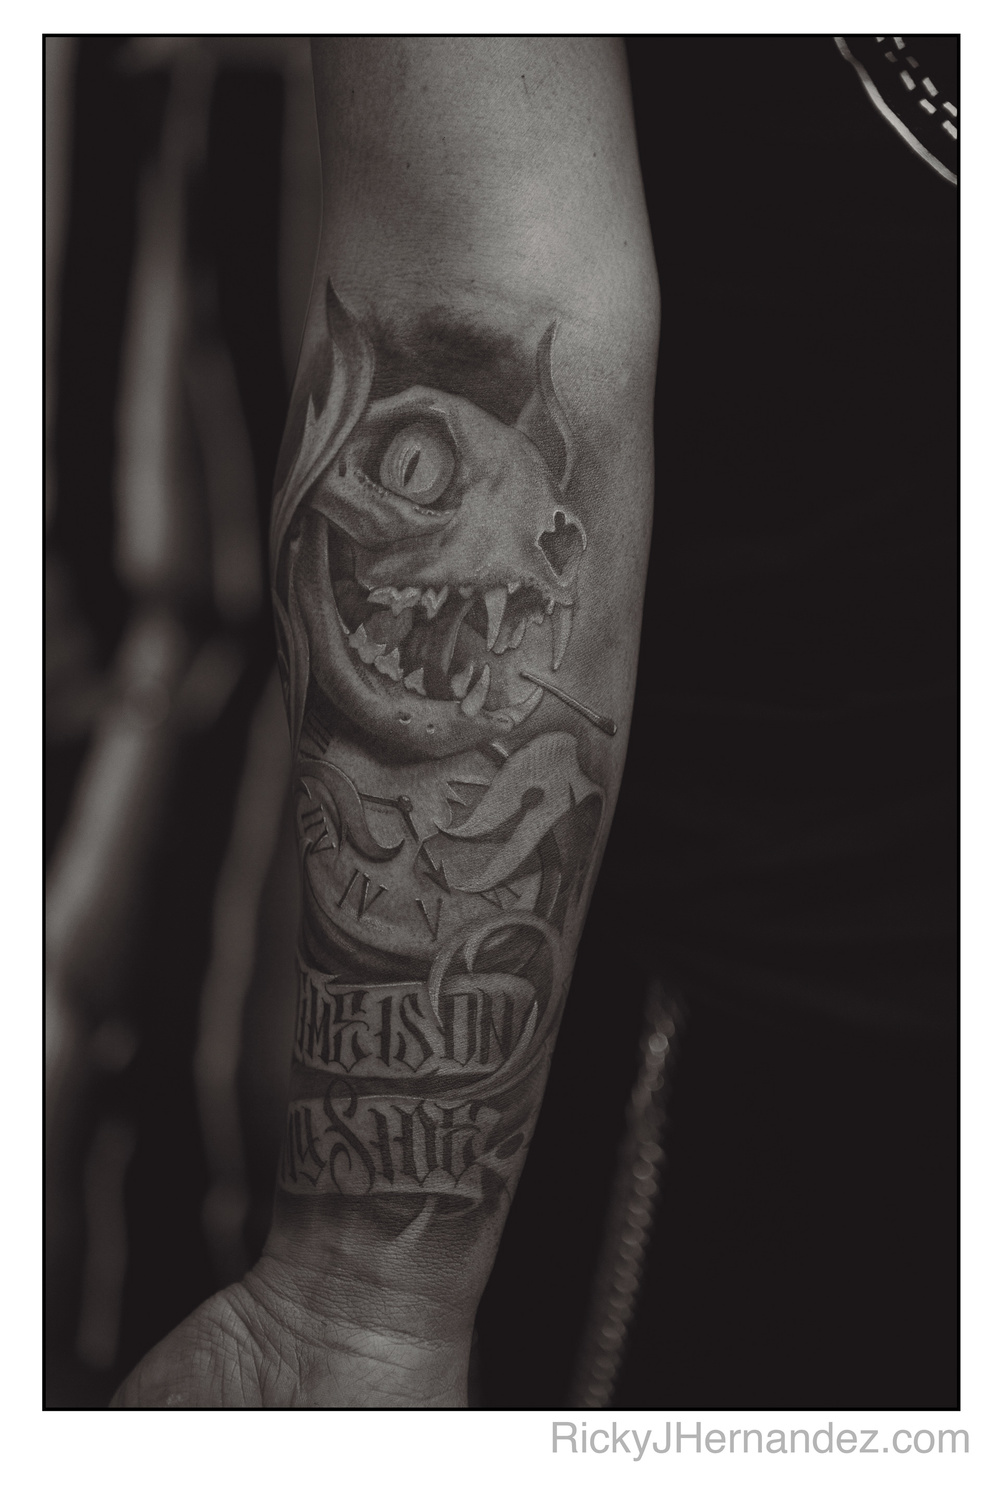 Ricky-J-Hernandez-Portrait-of-Italian-tattoo-artist-Macko-and-Fo